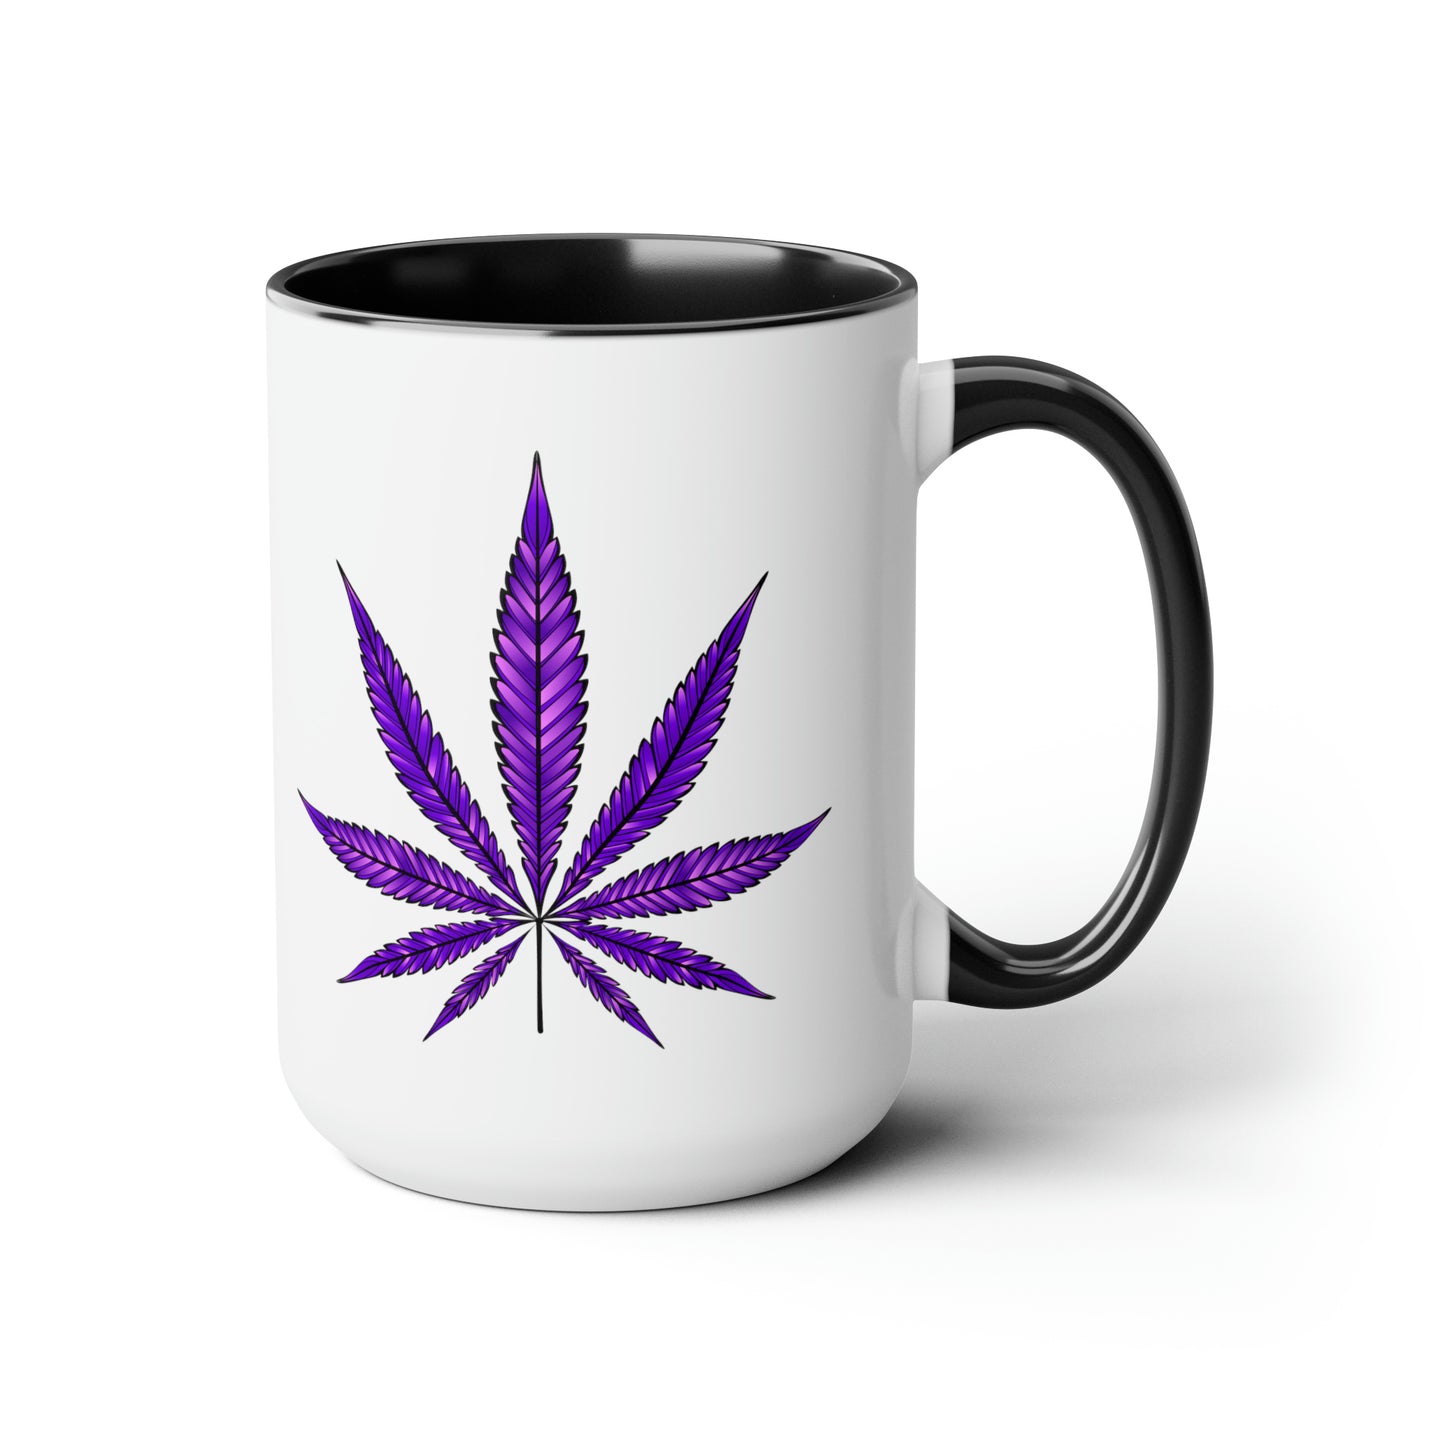 Purple Haze Marijuana Coffee Mug with a black interior and handle, featuring a large Purple Haze Marijuana leaf design on the side.